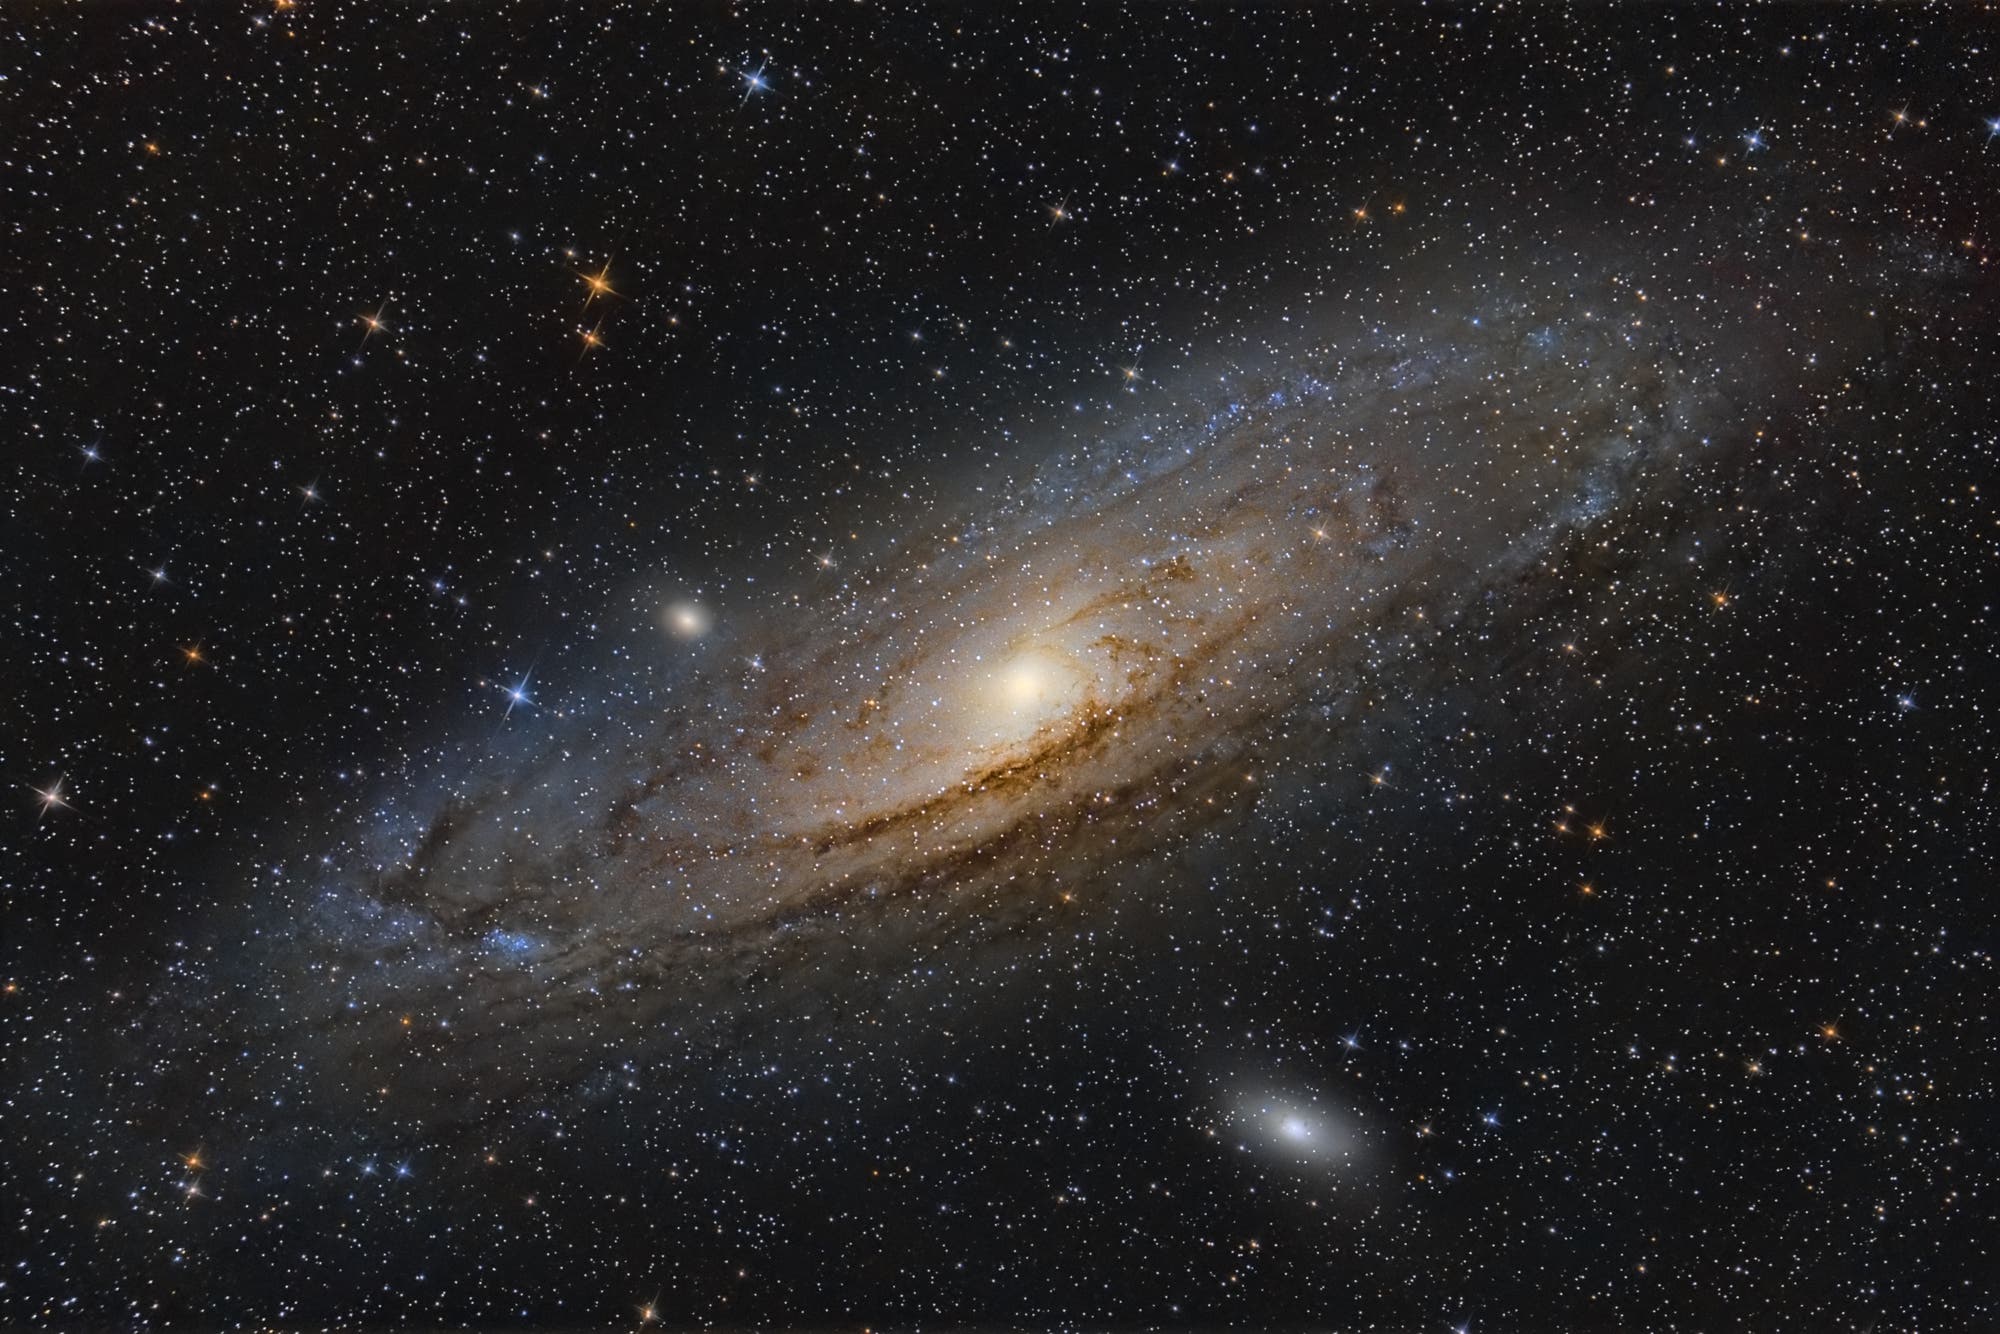 M31 - Andromedagalaxie